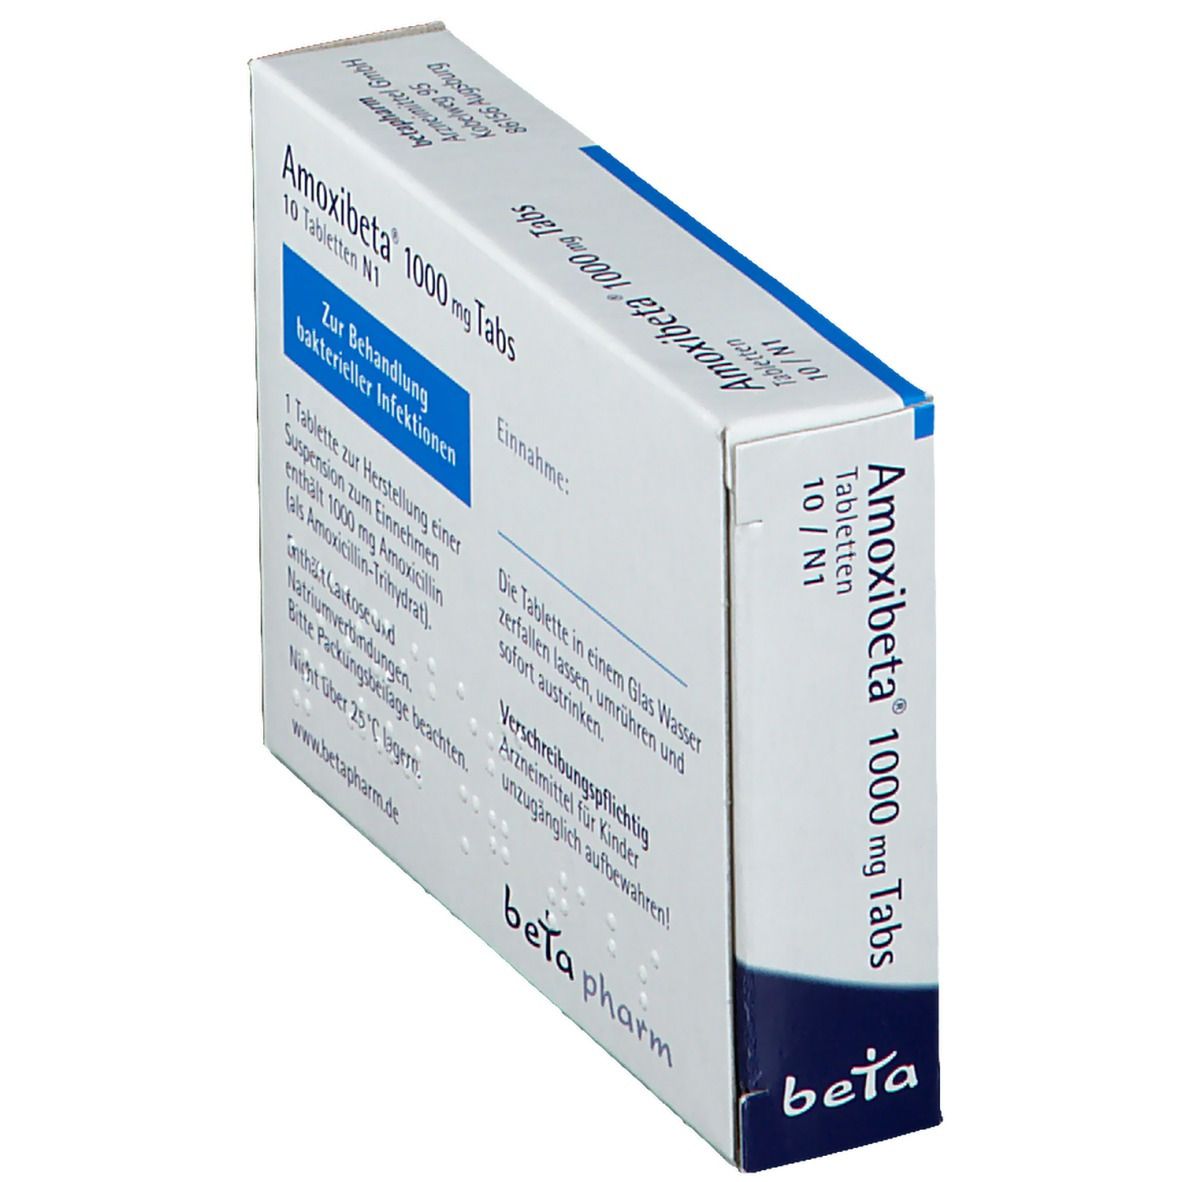 Amoxibeta 1000 mg Tabs Tabletten